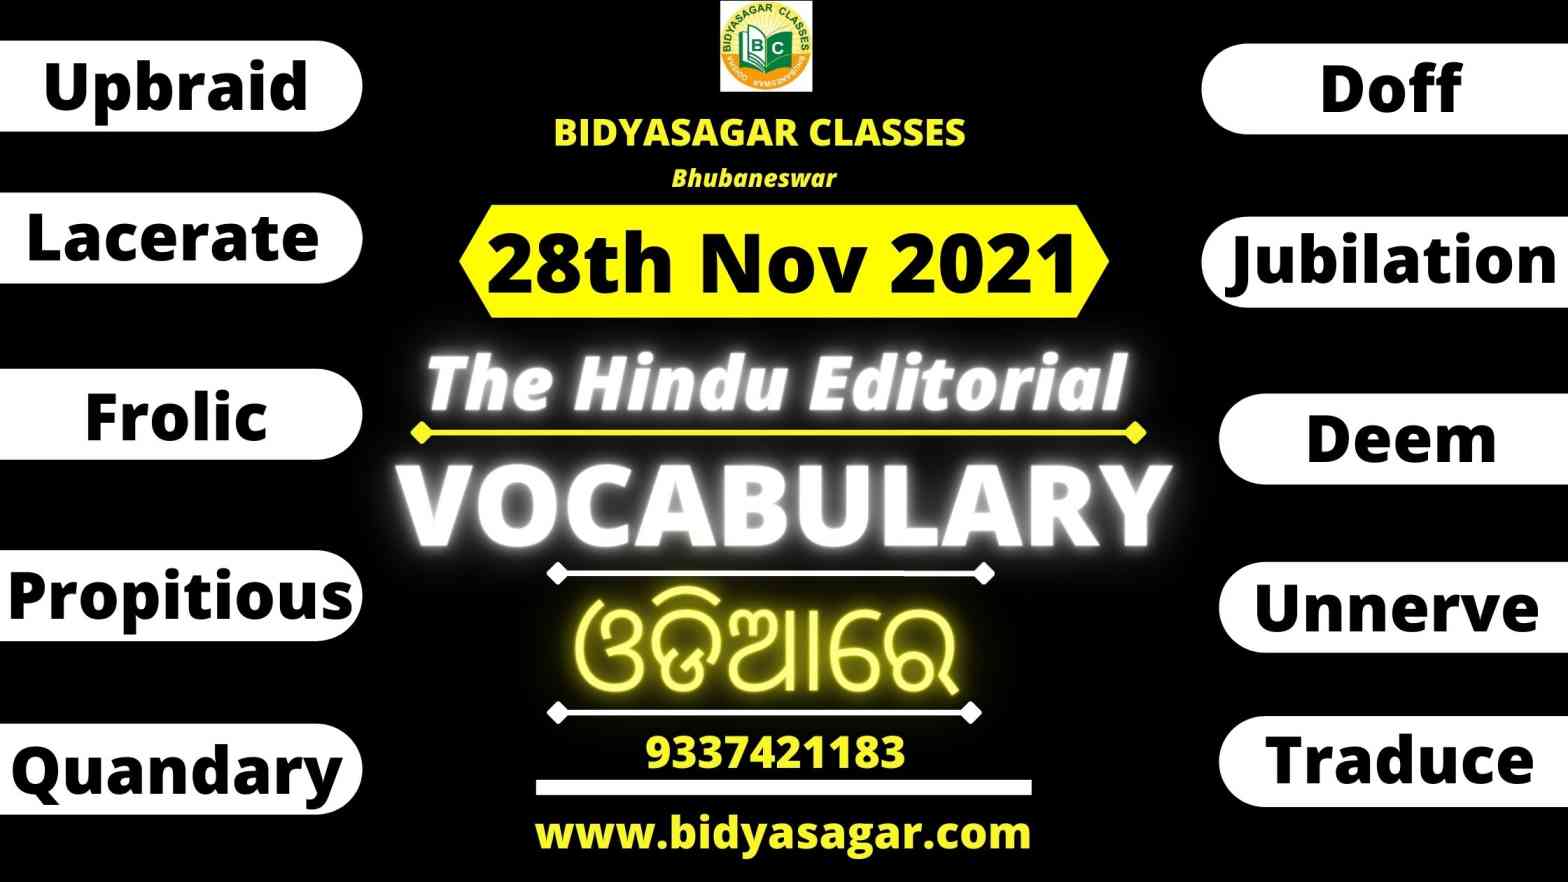 The Hindu Editorial Vocabulary of 28th November 2021